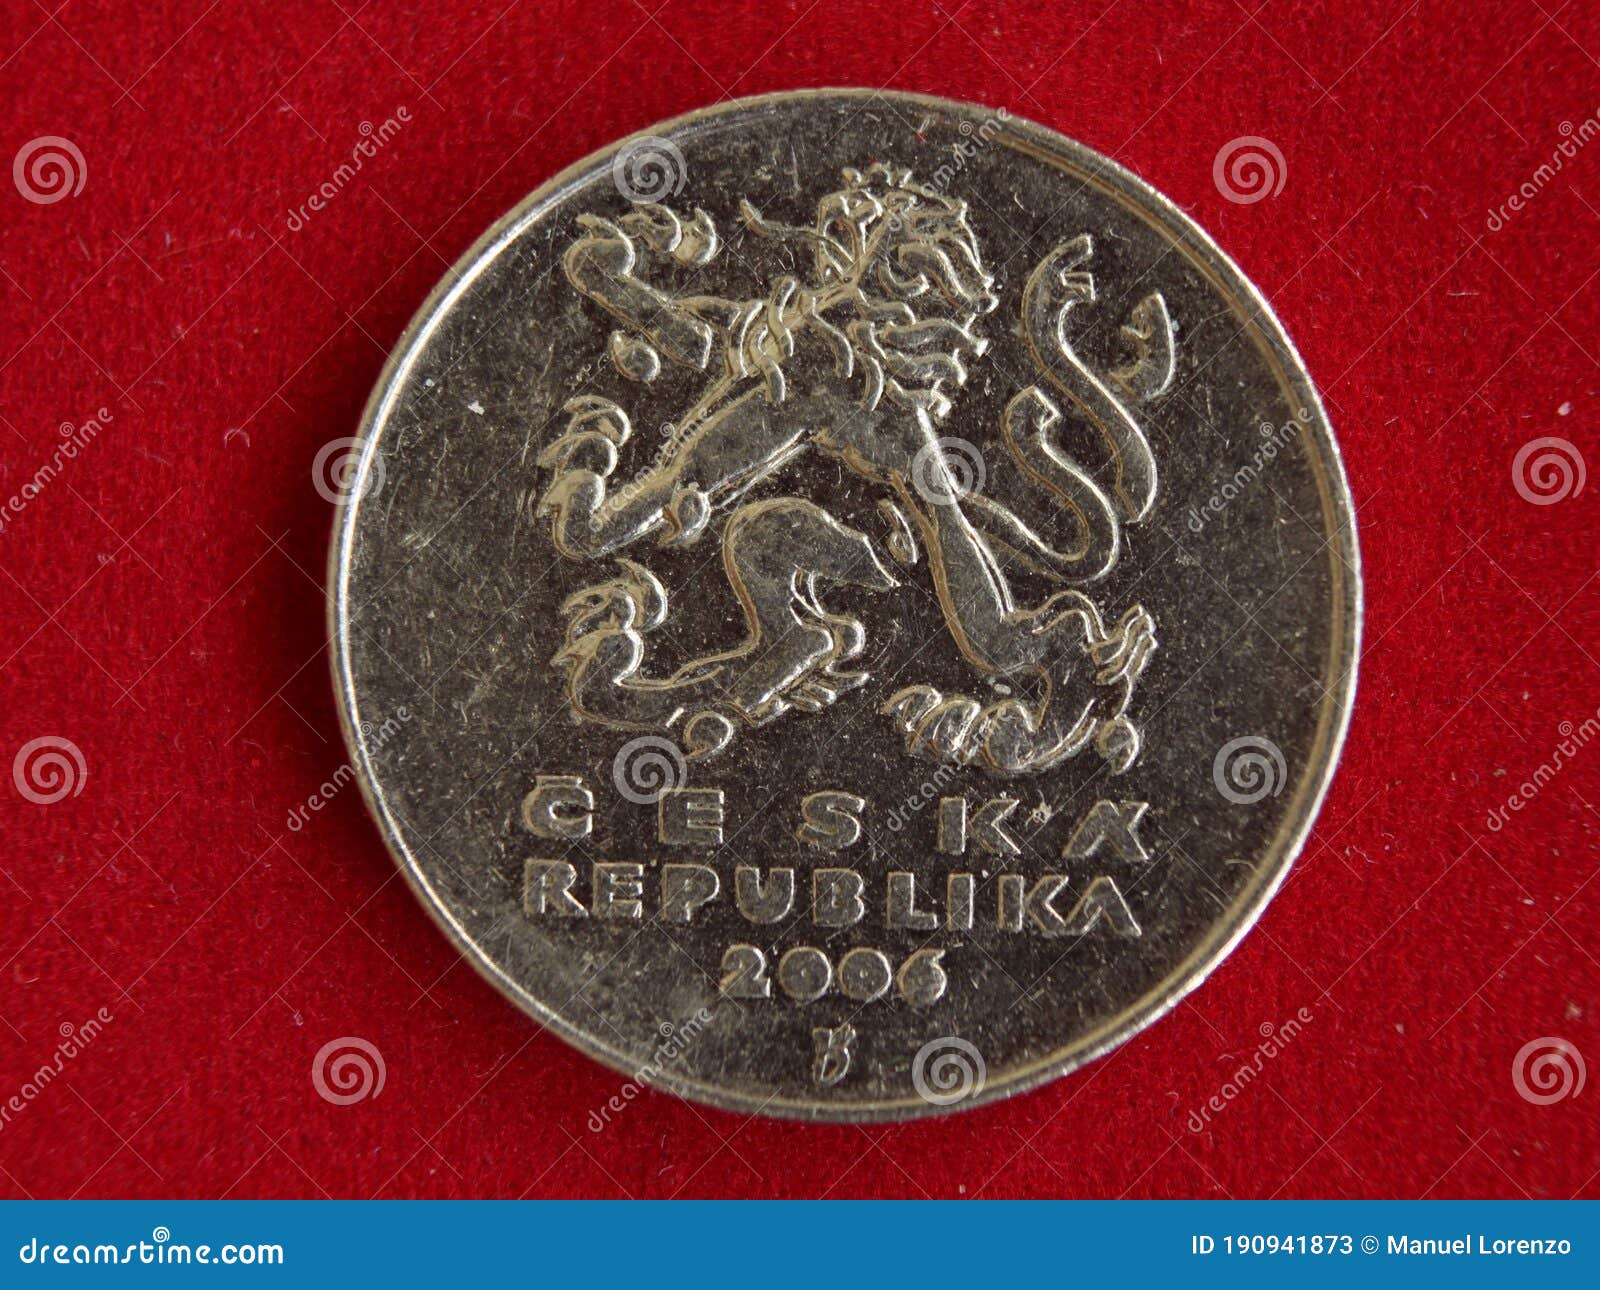 coins money value metal round treasure state